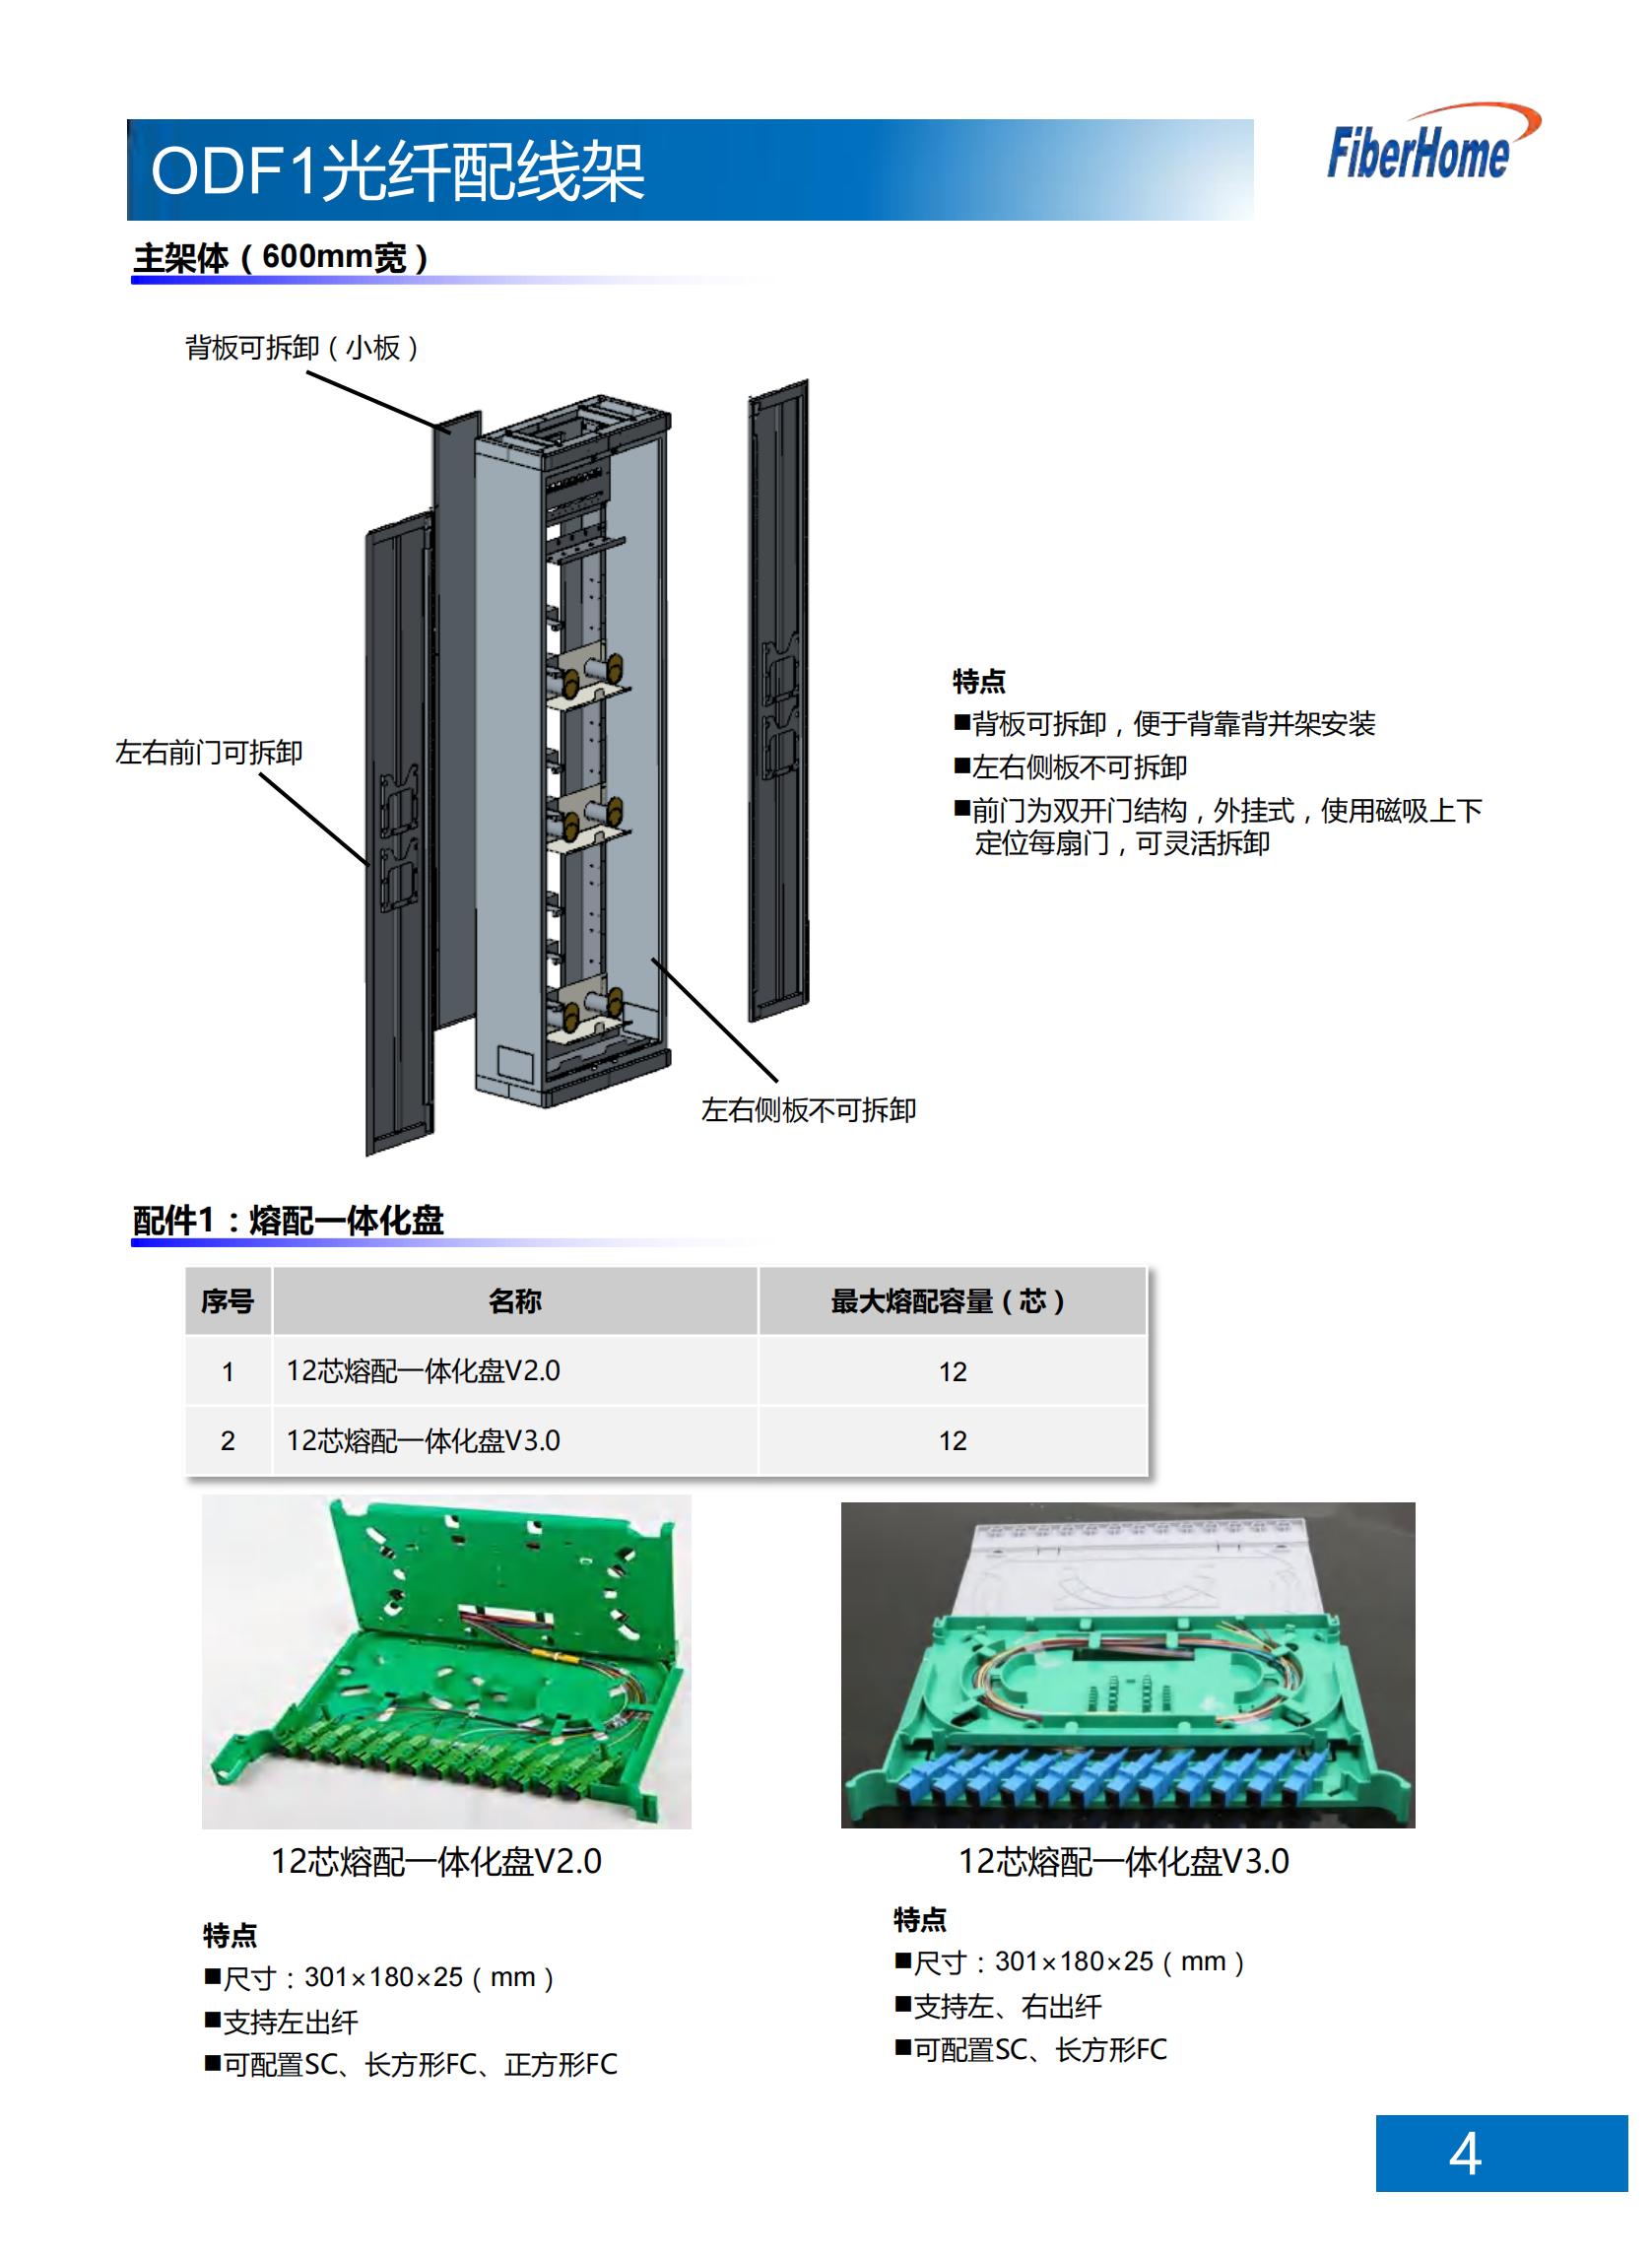 ODF101-720-A2-SC ODF光纤配线架 （720芯落地式 全部含12芯SC熔配一体化单元）